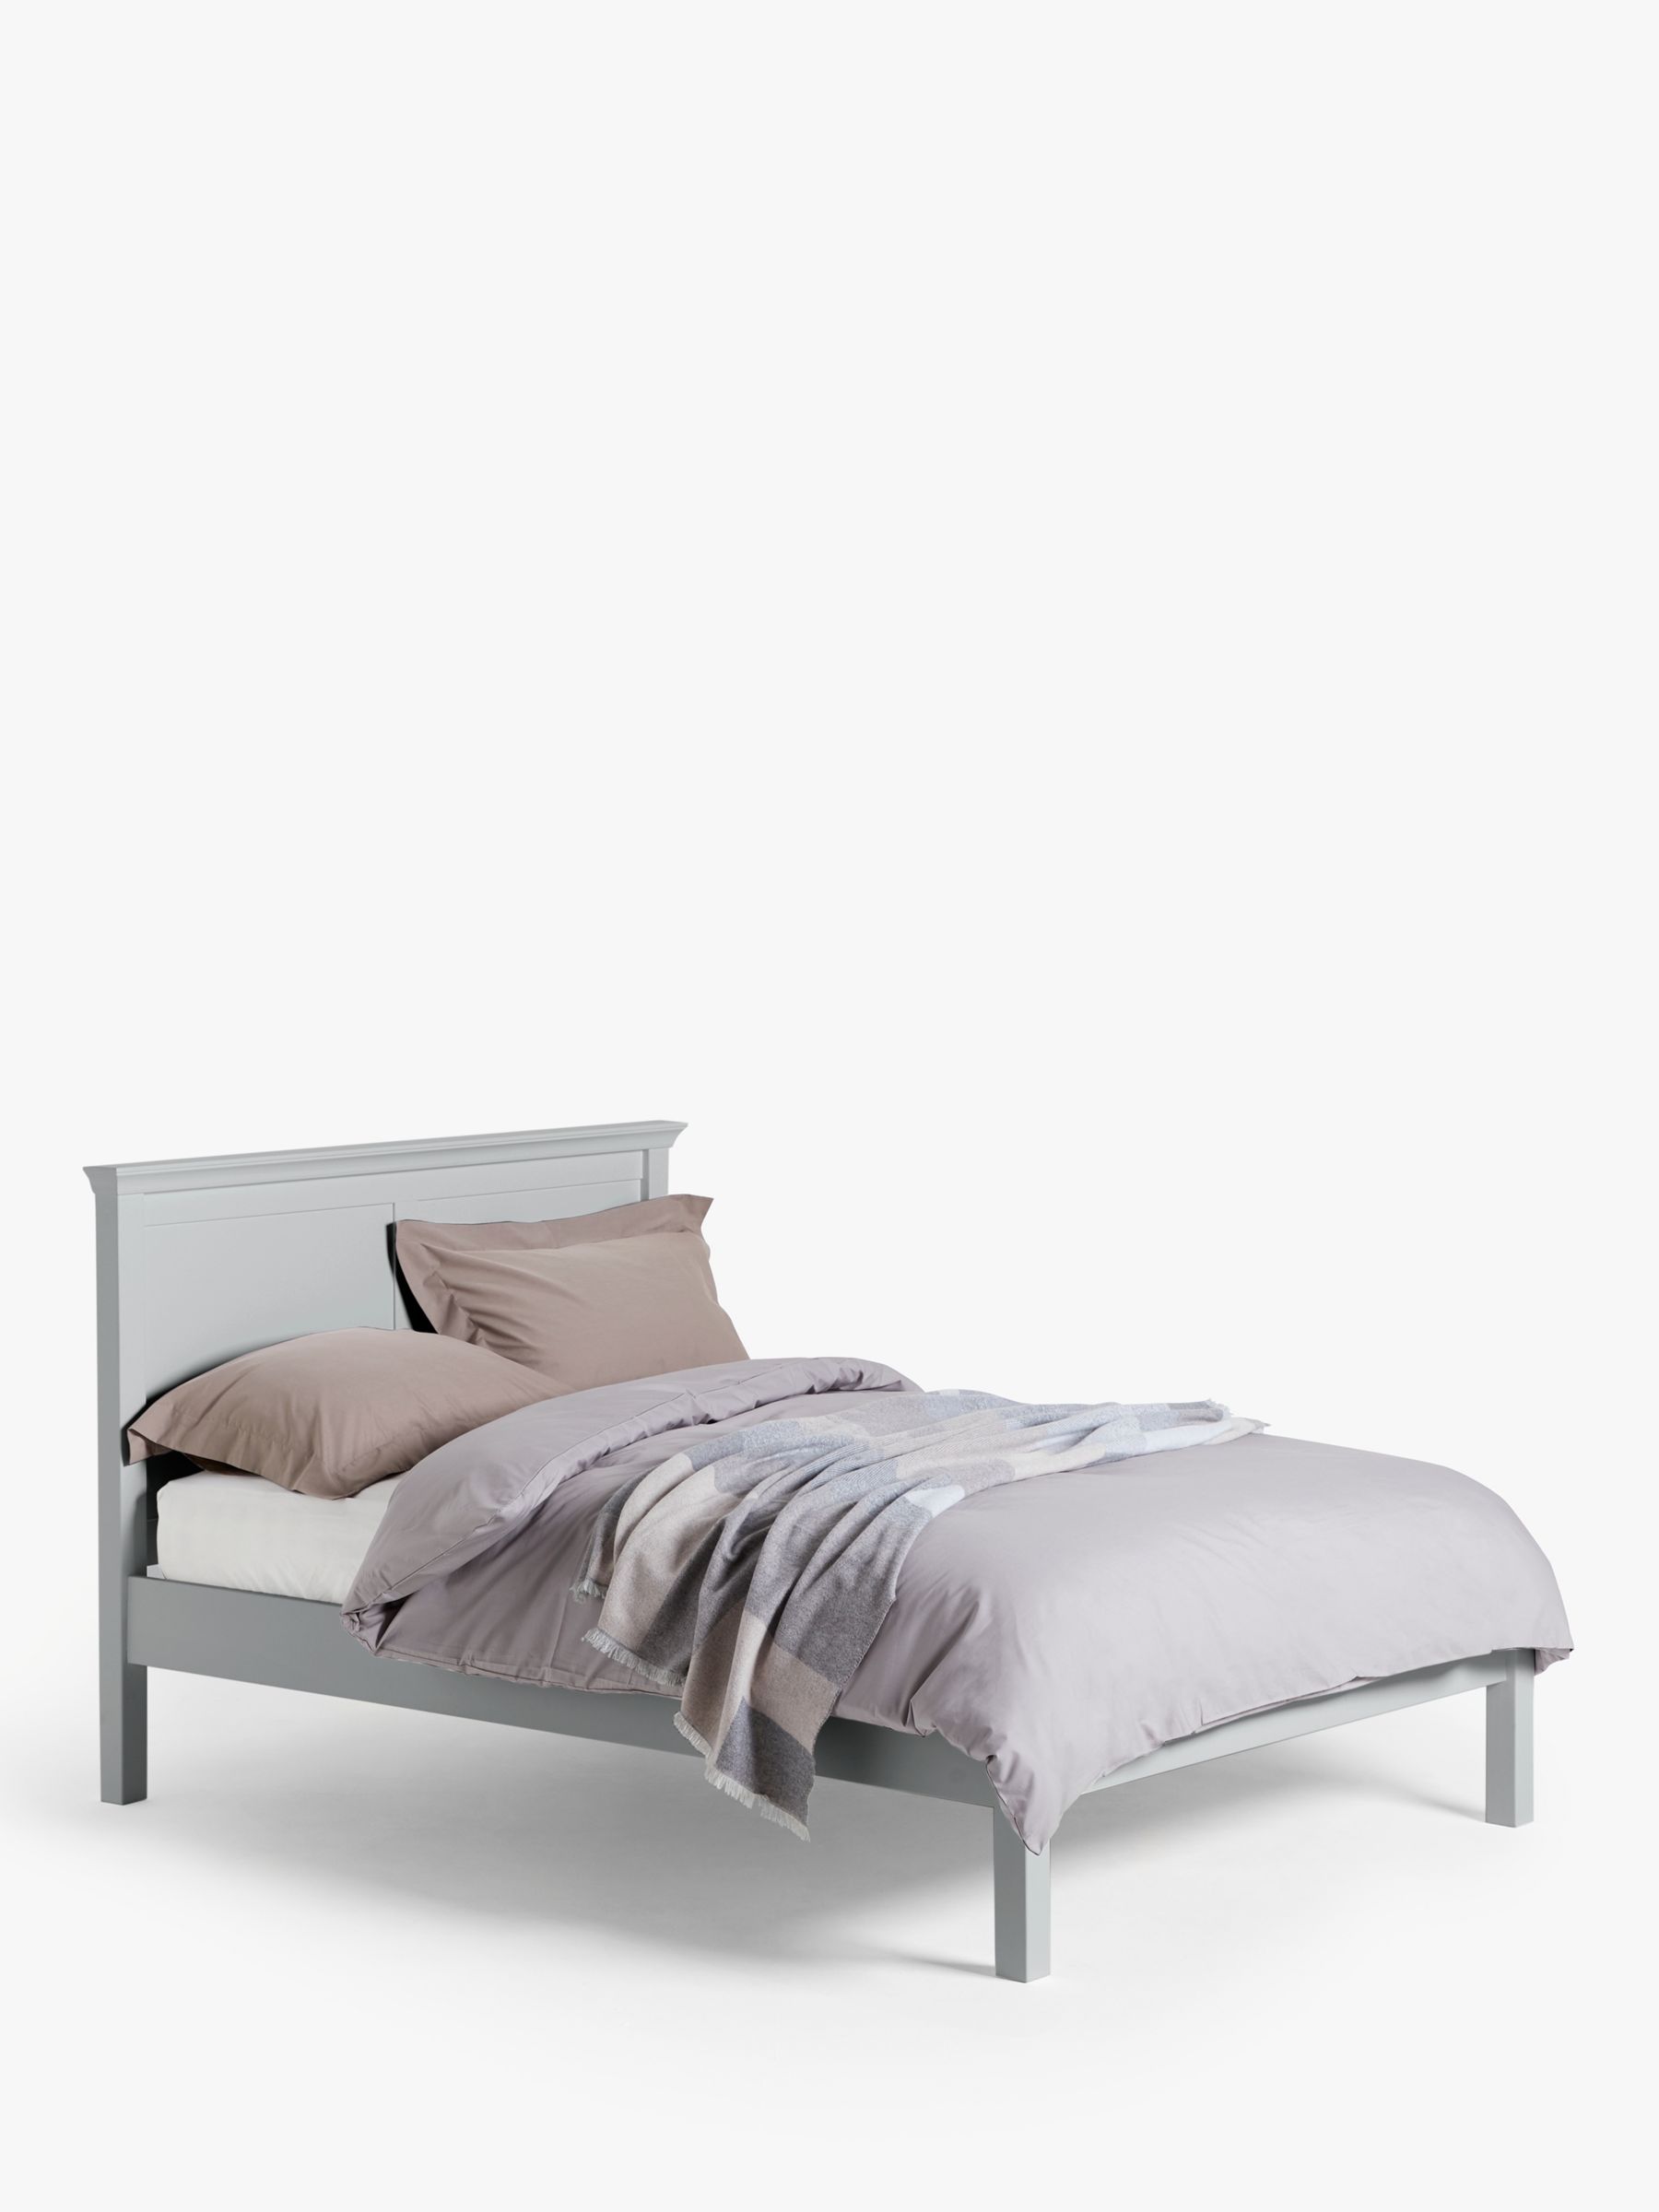 John Lewis & Partners Lymington Bed Frame, King Size